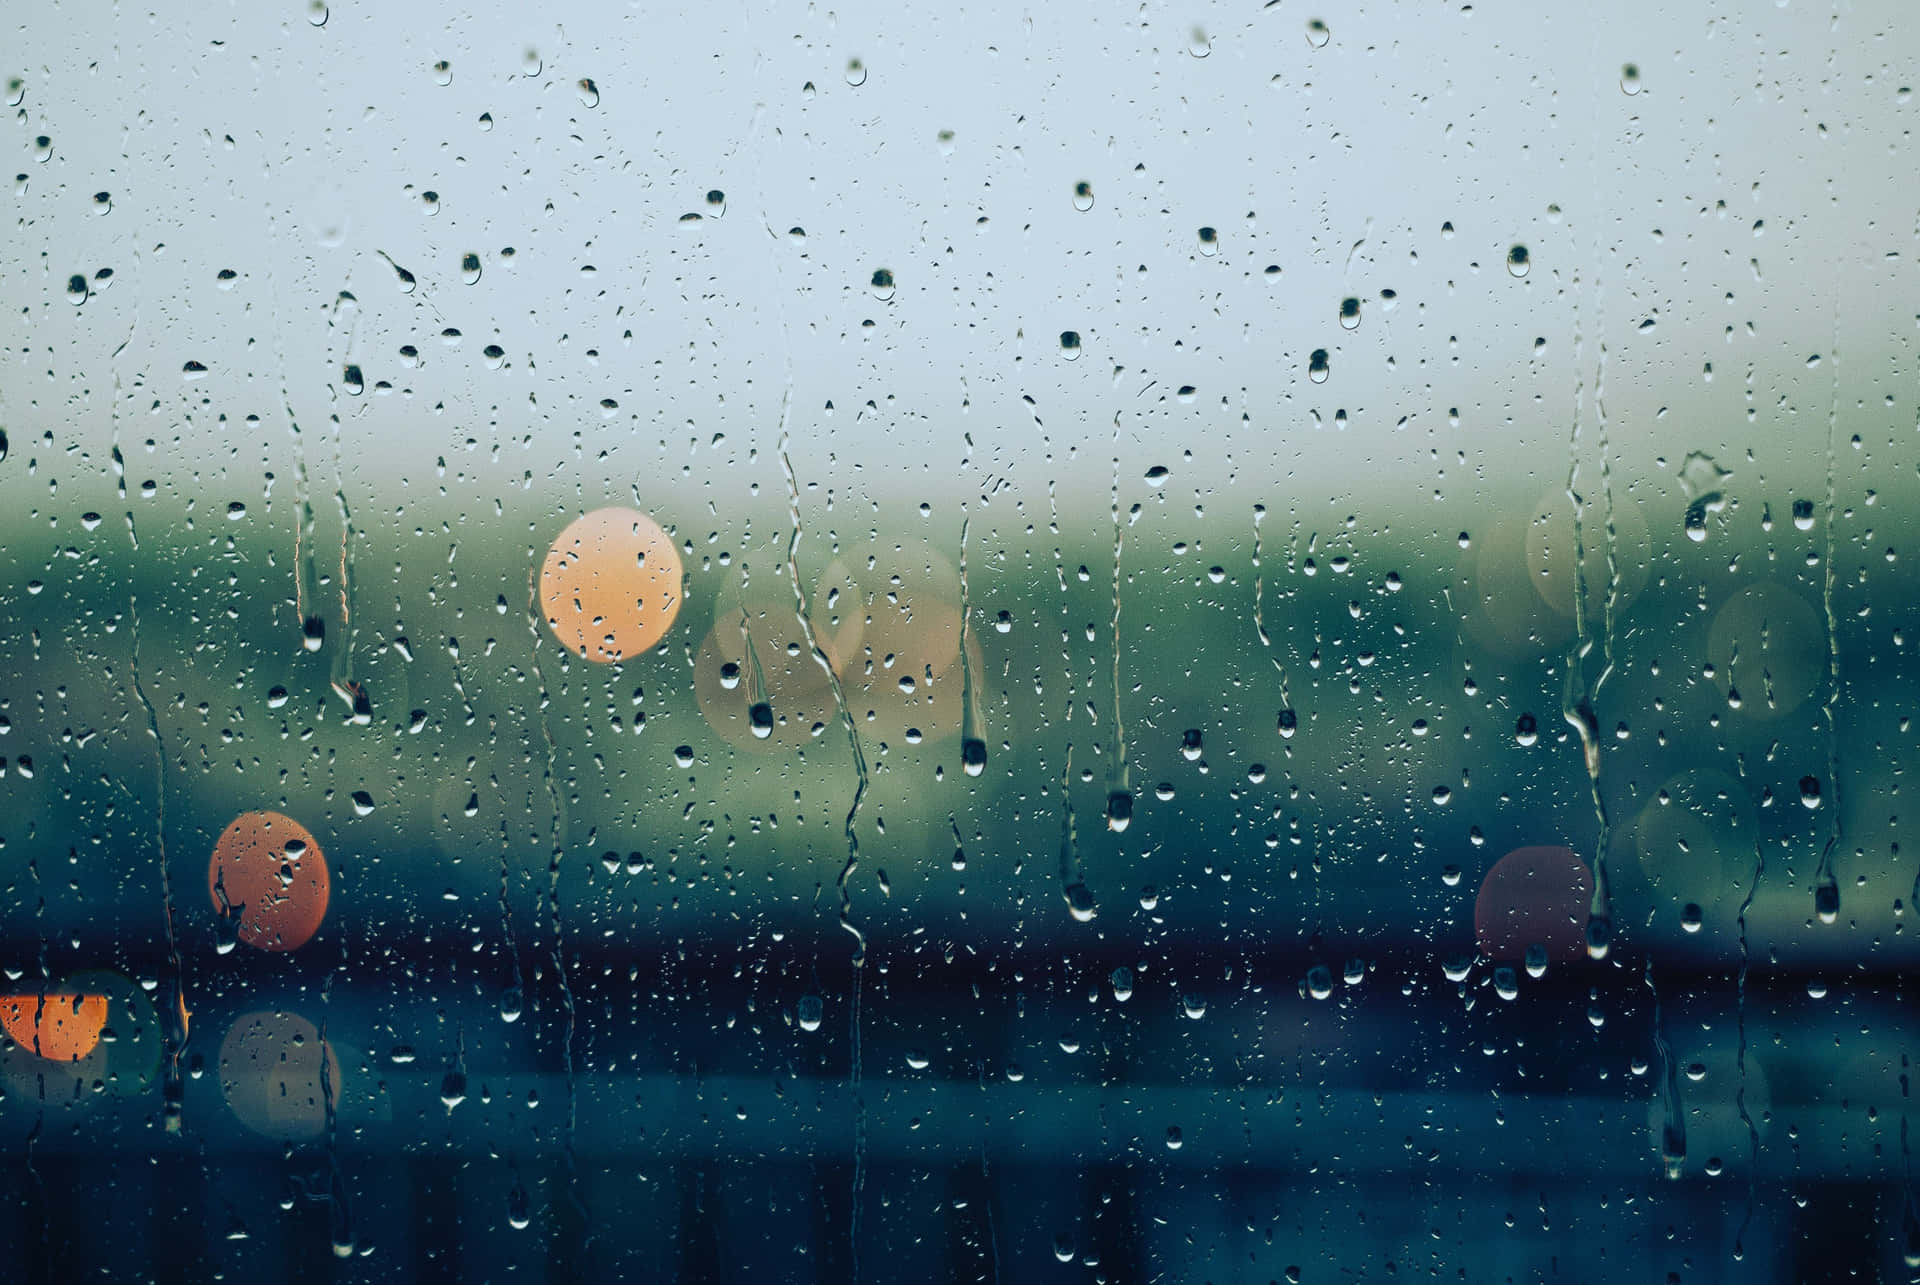 Aesthetic Raindrops On Blurry Car Window Wallpaper